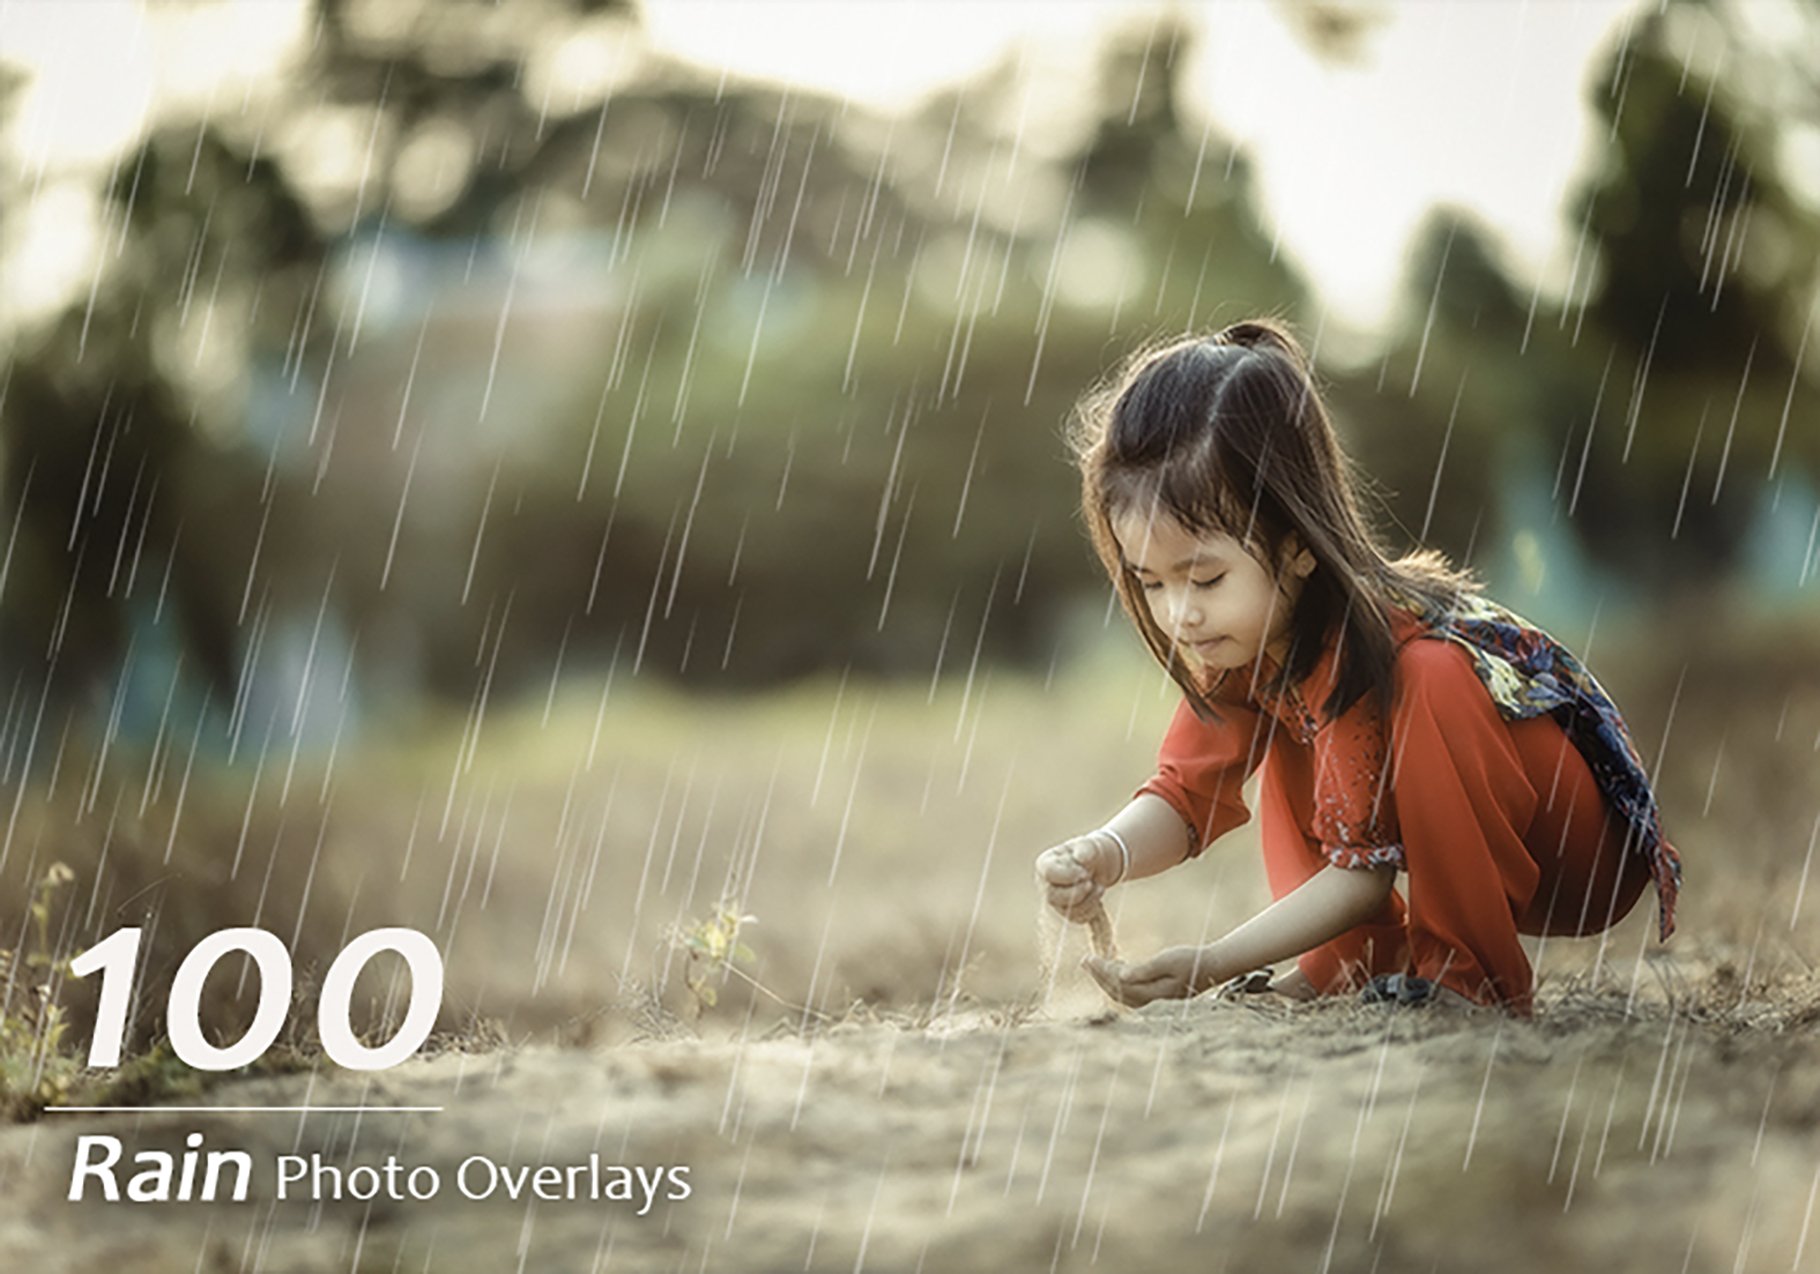 100 Rain Photo Overlayscover image.